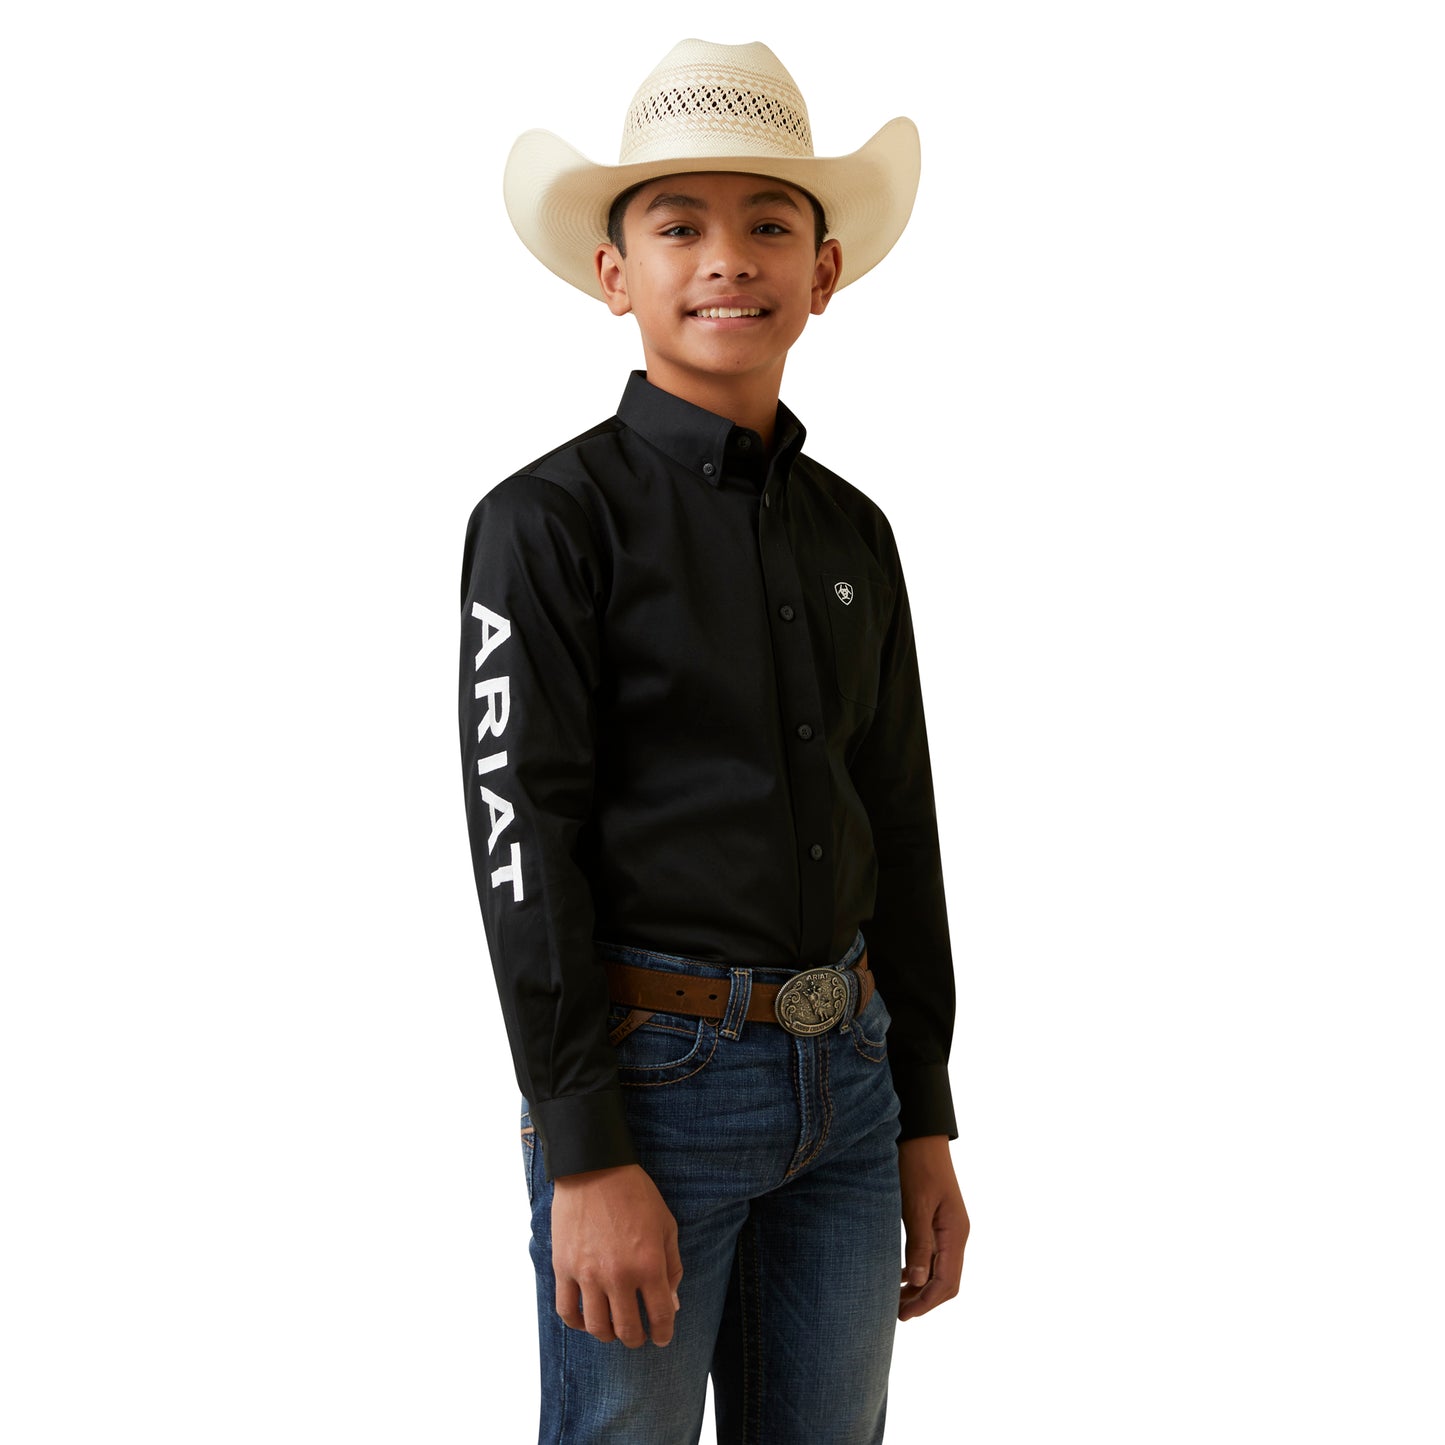 Ariat® Youth Boy's Team Logo Twill Classic Fit Black Shirt 10045426